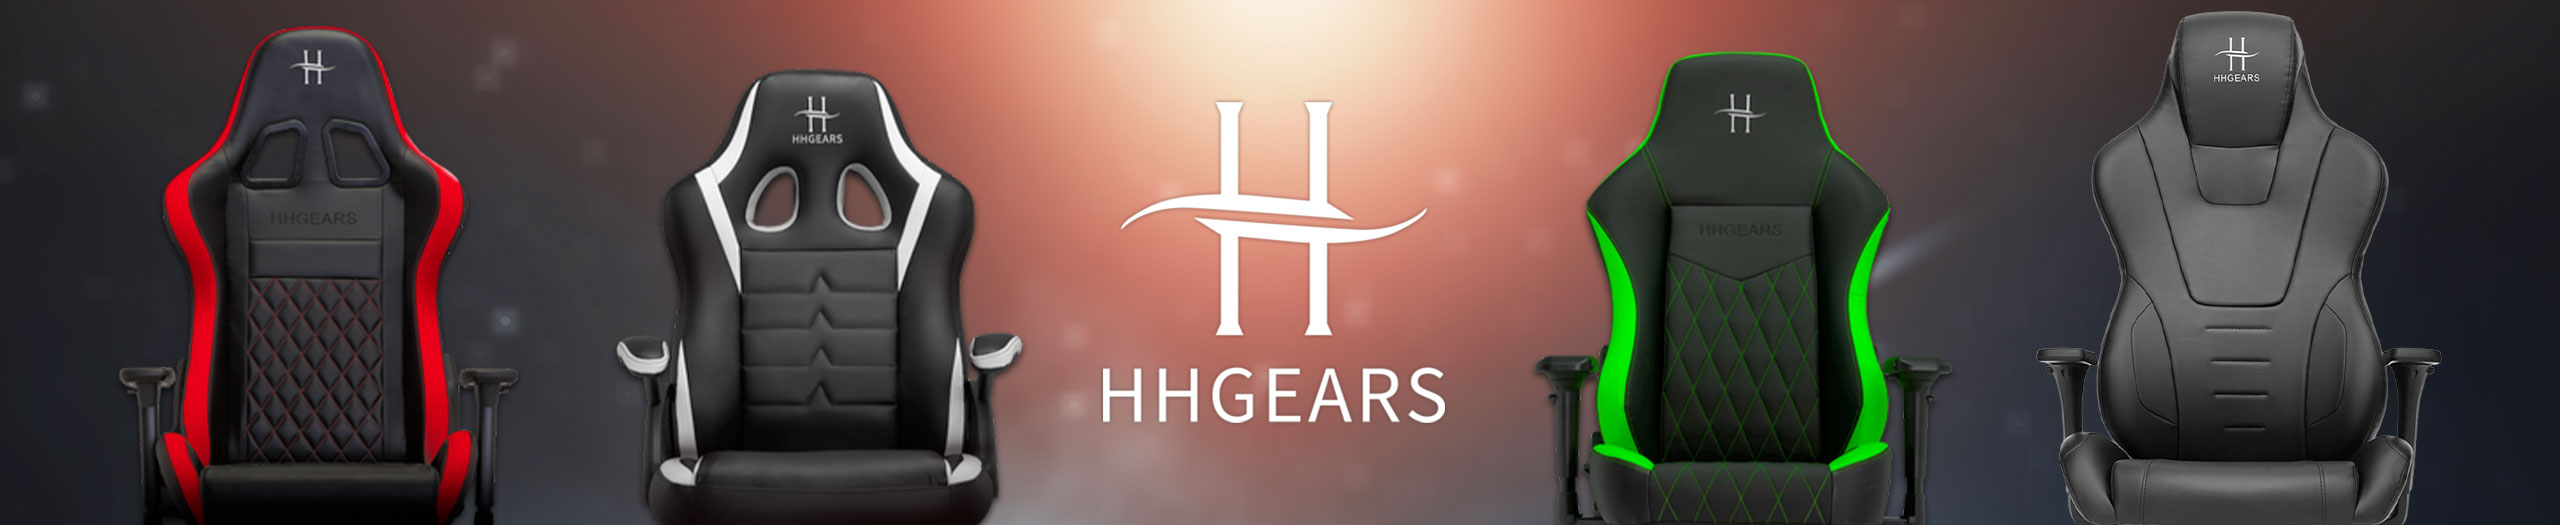 HHGears South Africa